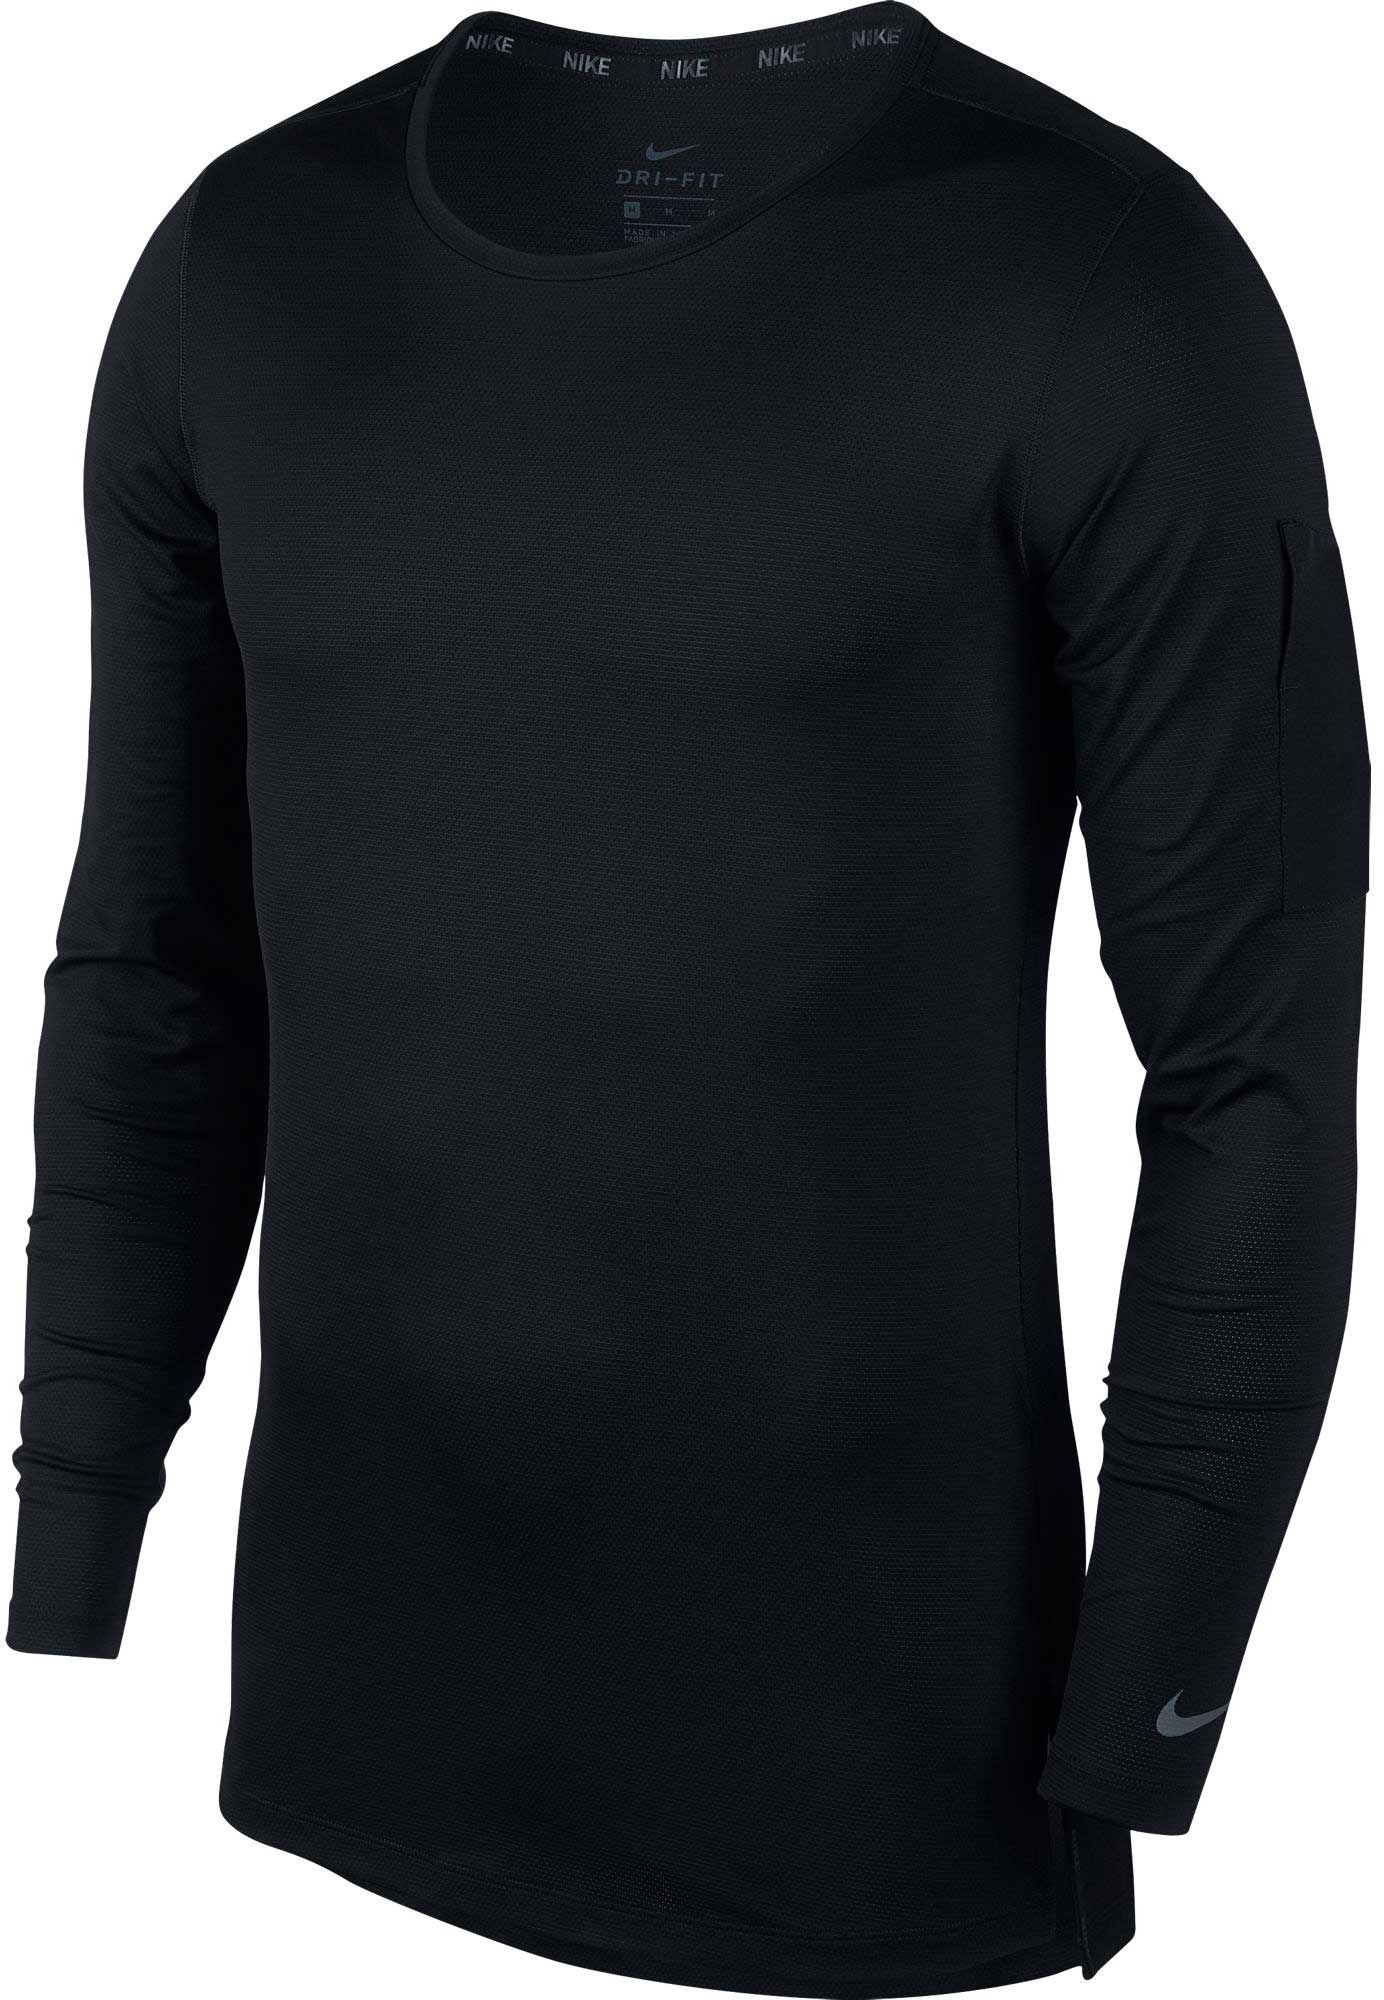 nike men's modern utility fitted long sleeve training shirt